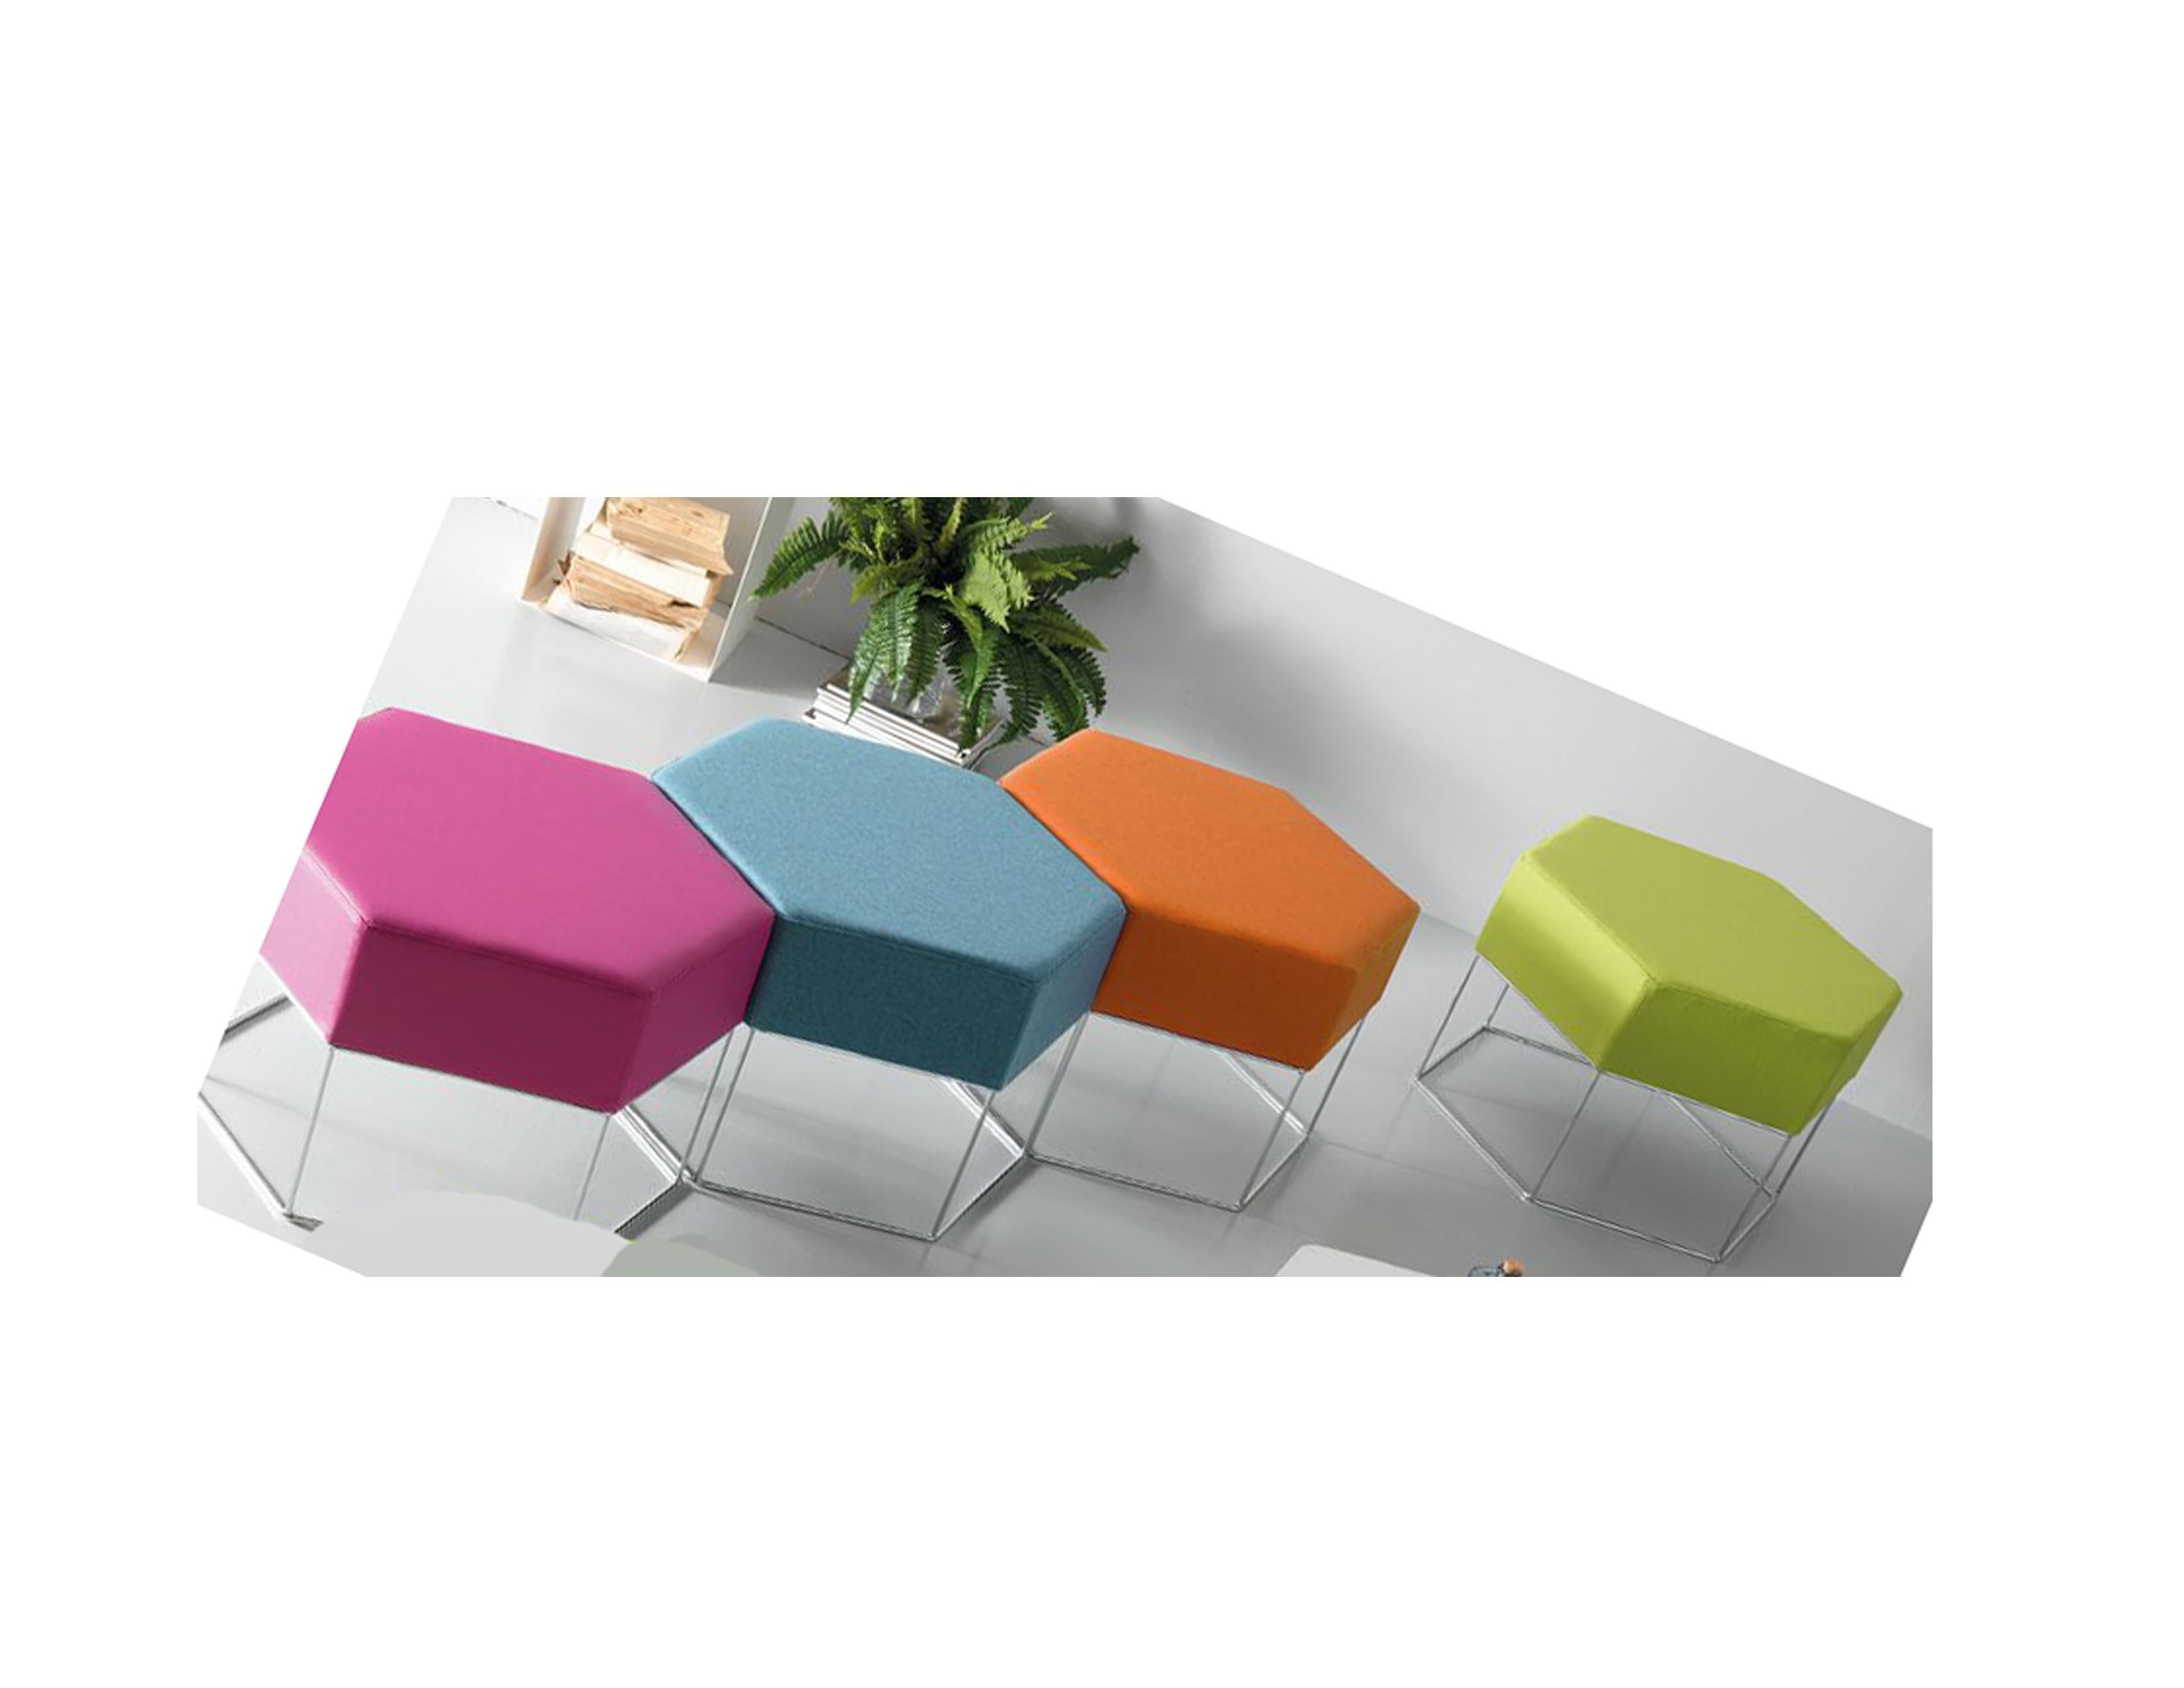 Sei Hexagonal seat
Steel chromed S
Fabric: Lana

(1) Color #223 celeste
(1) Color #225 lime
(1) Color #226 orange
(1) Color #227 fuksia.